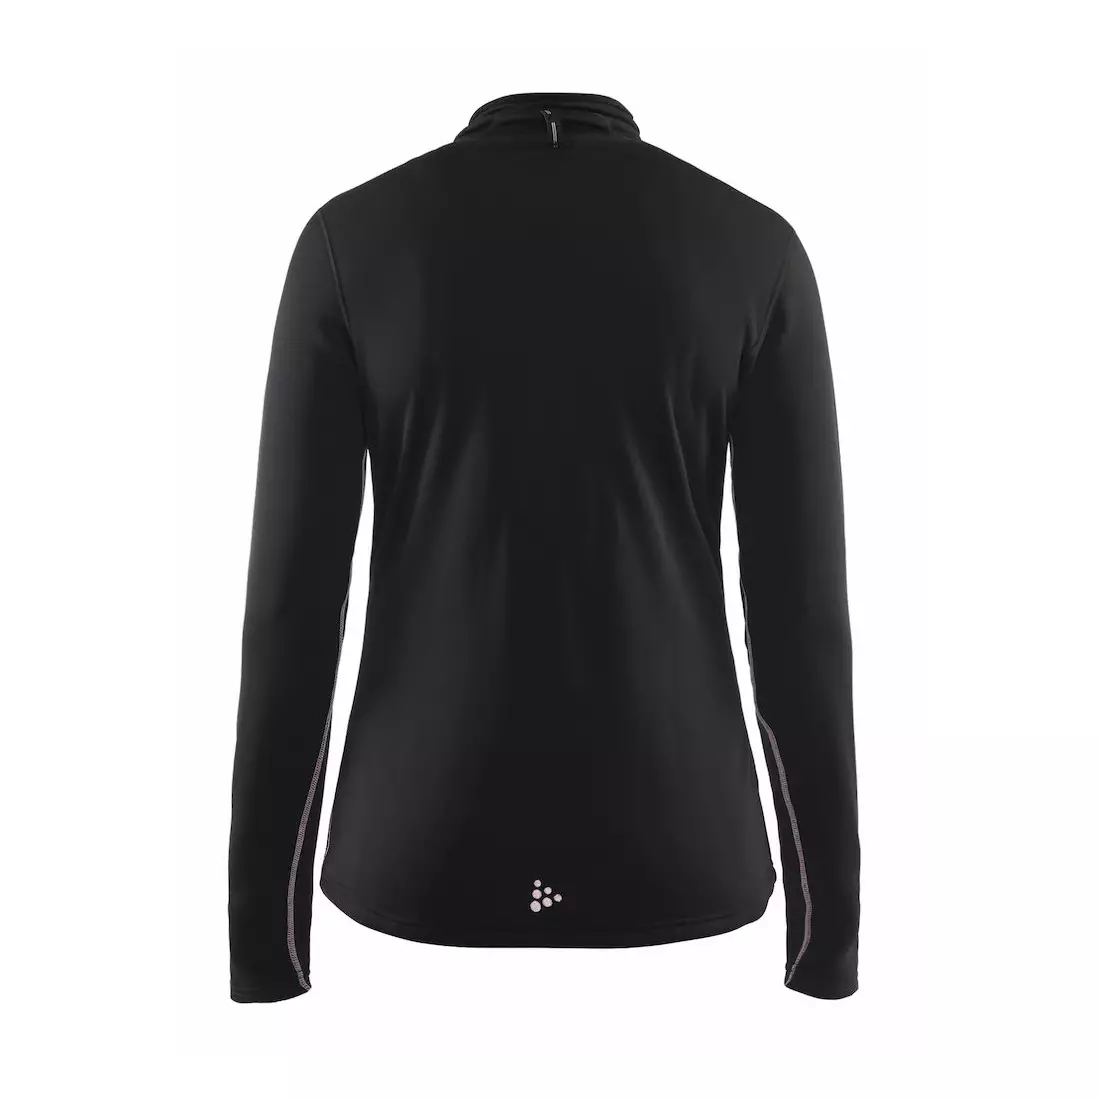 CRAFT SWEEP women's sports sweatshirt 1905300-999701